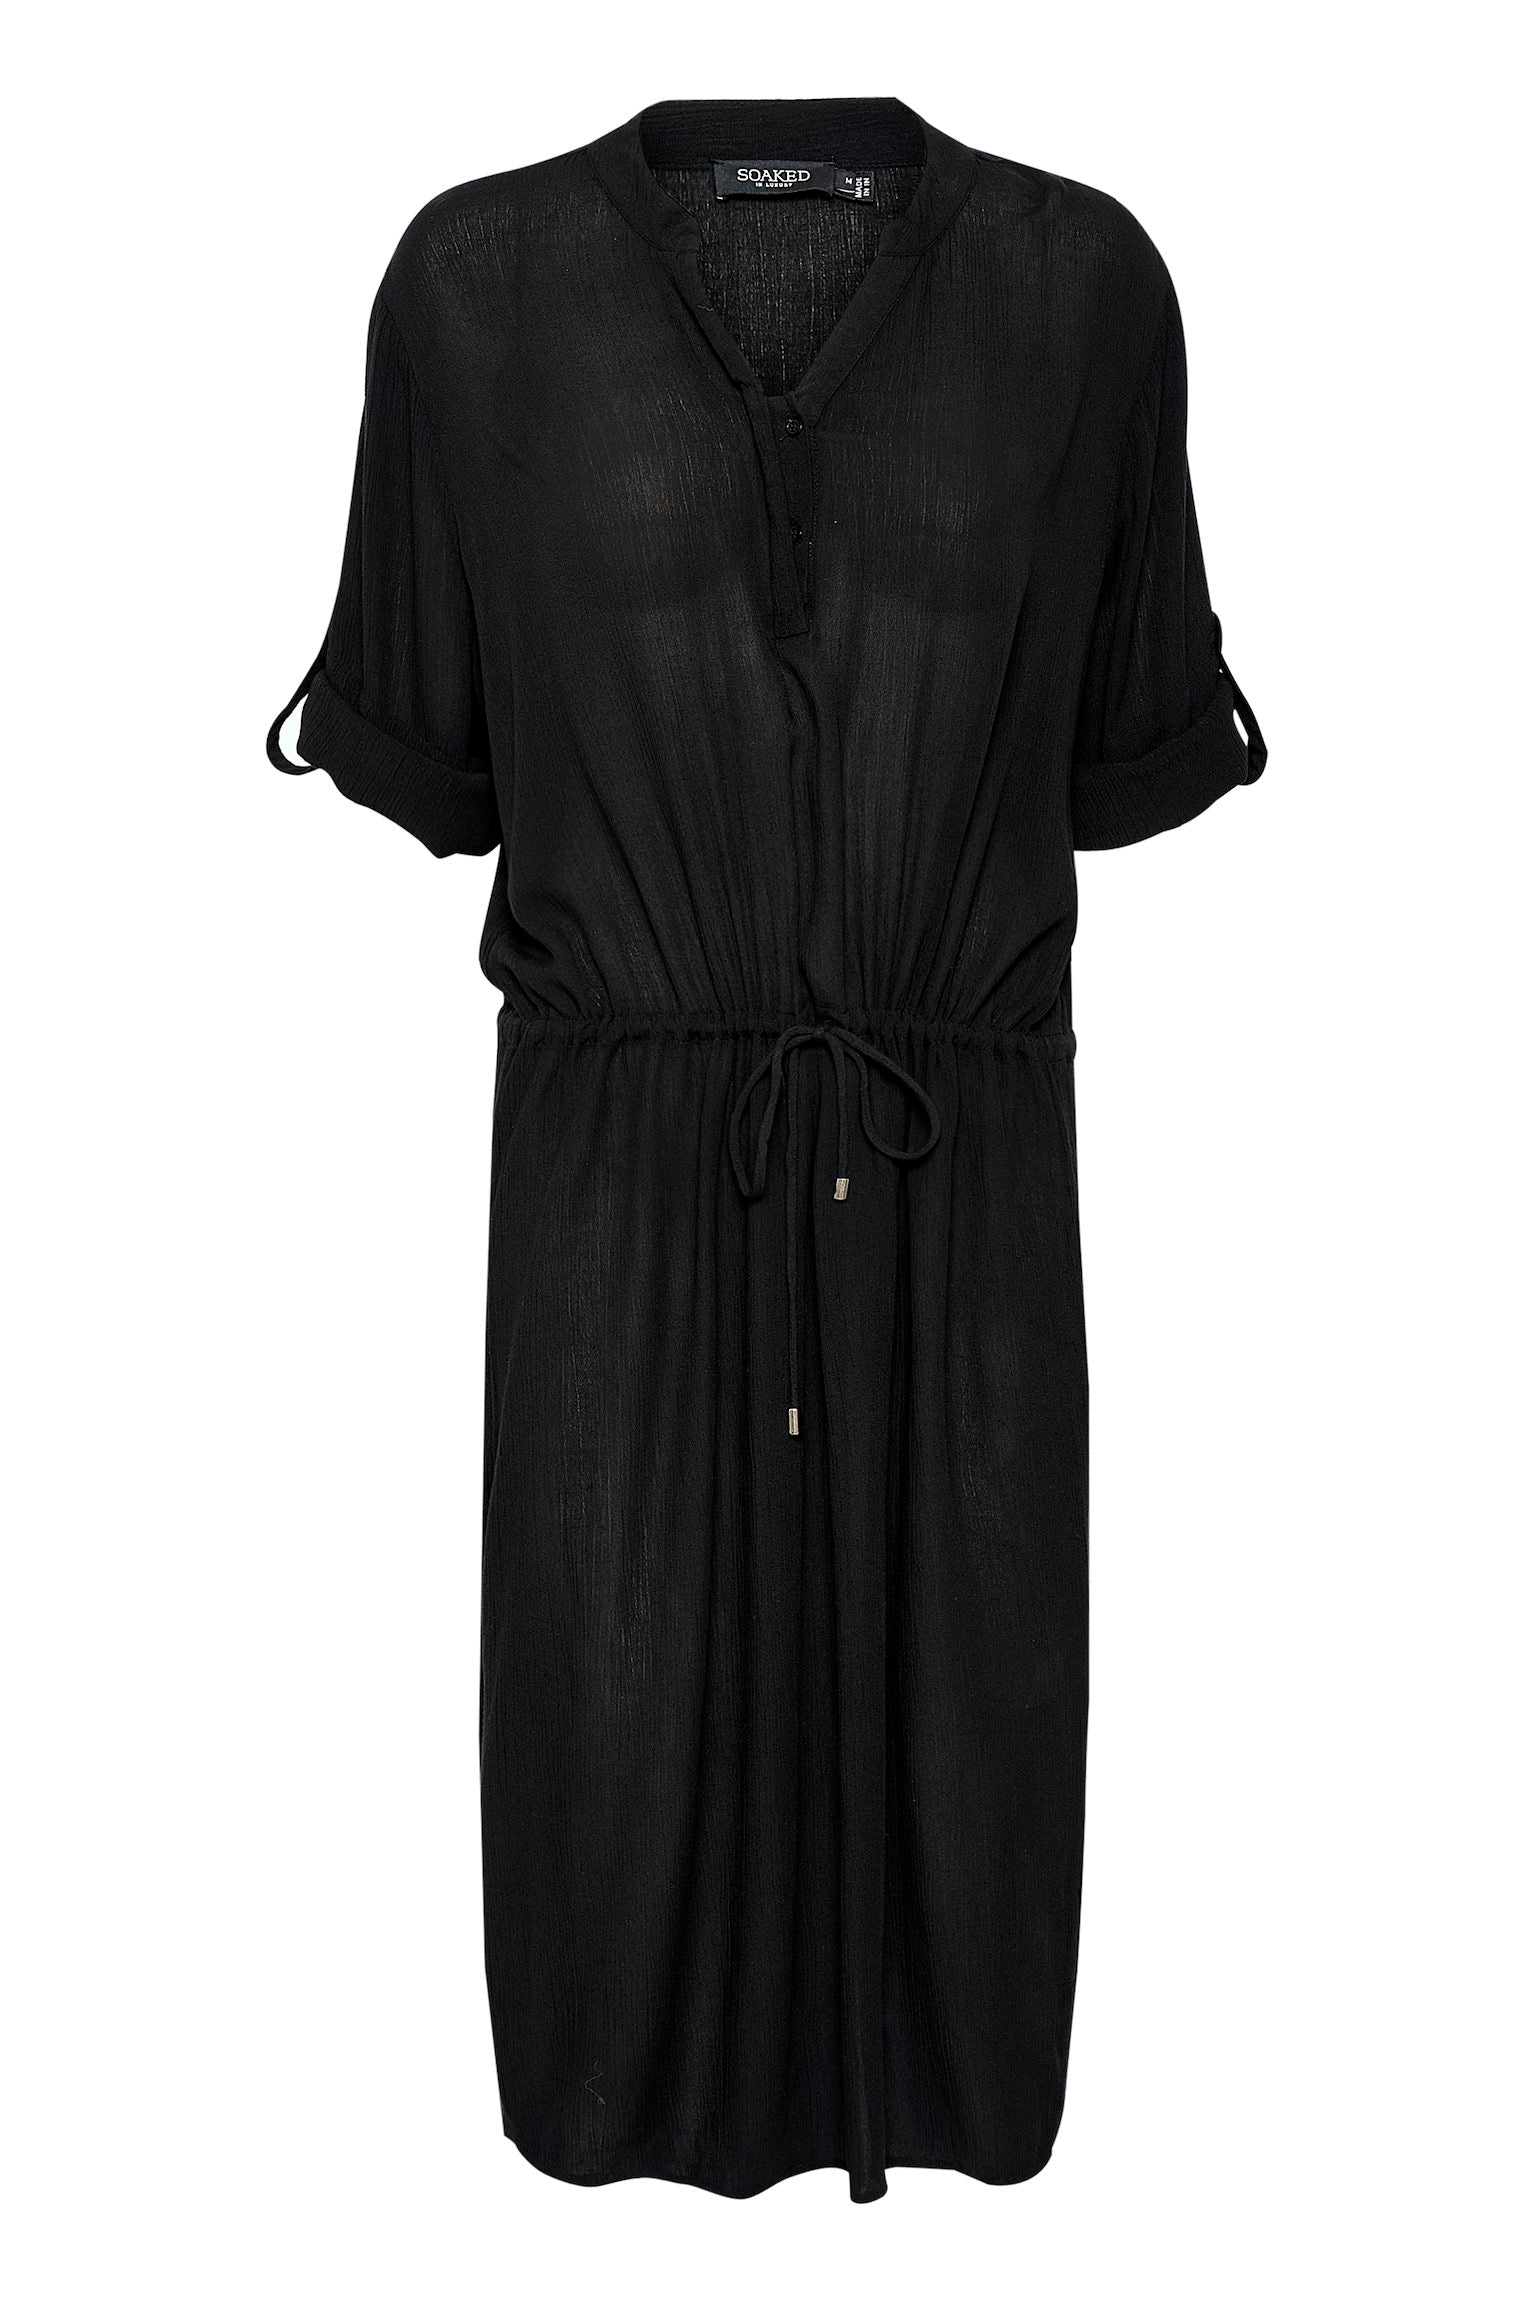 SLZaya Dress, Black, Kjole fra Soaked in Luxury